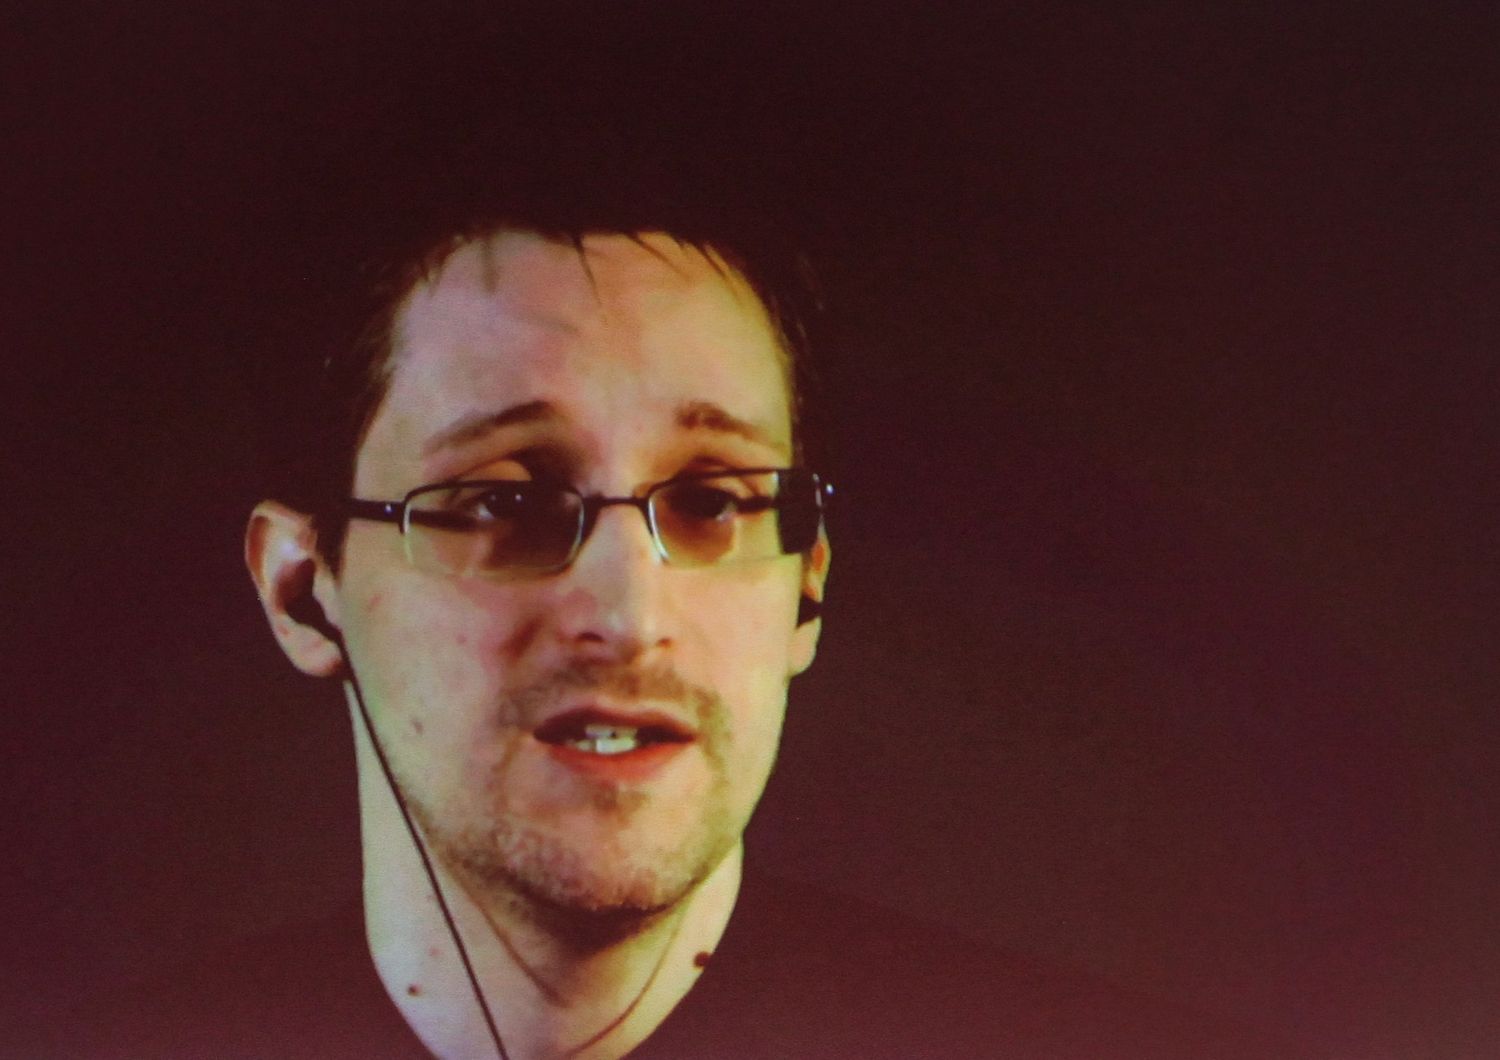 Edward Snowden (Agf)&nbsp;